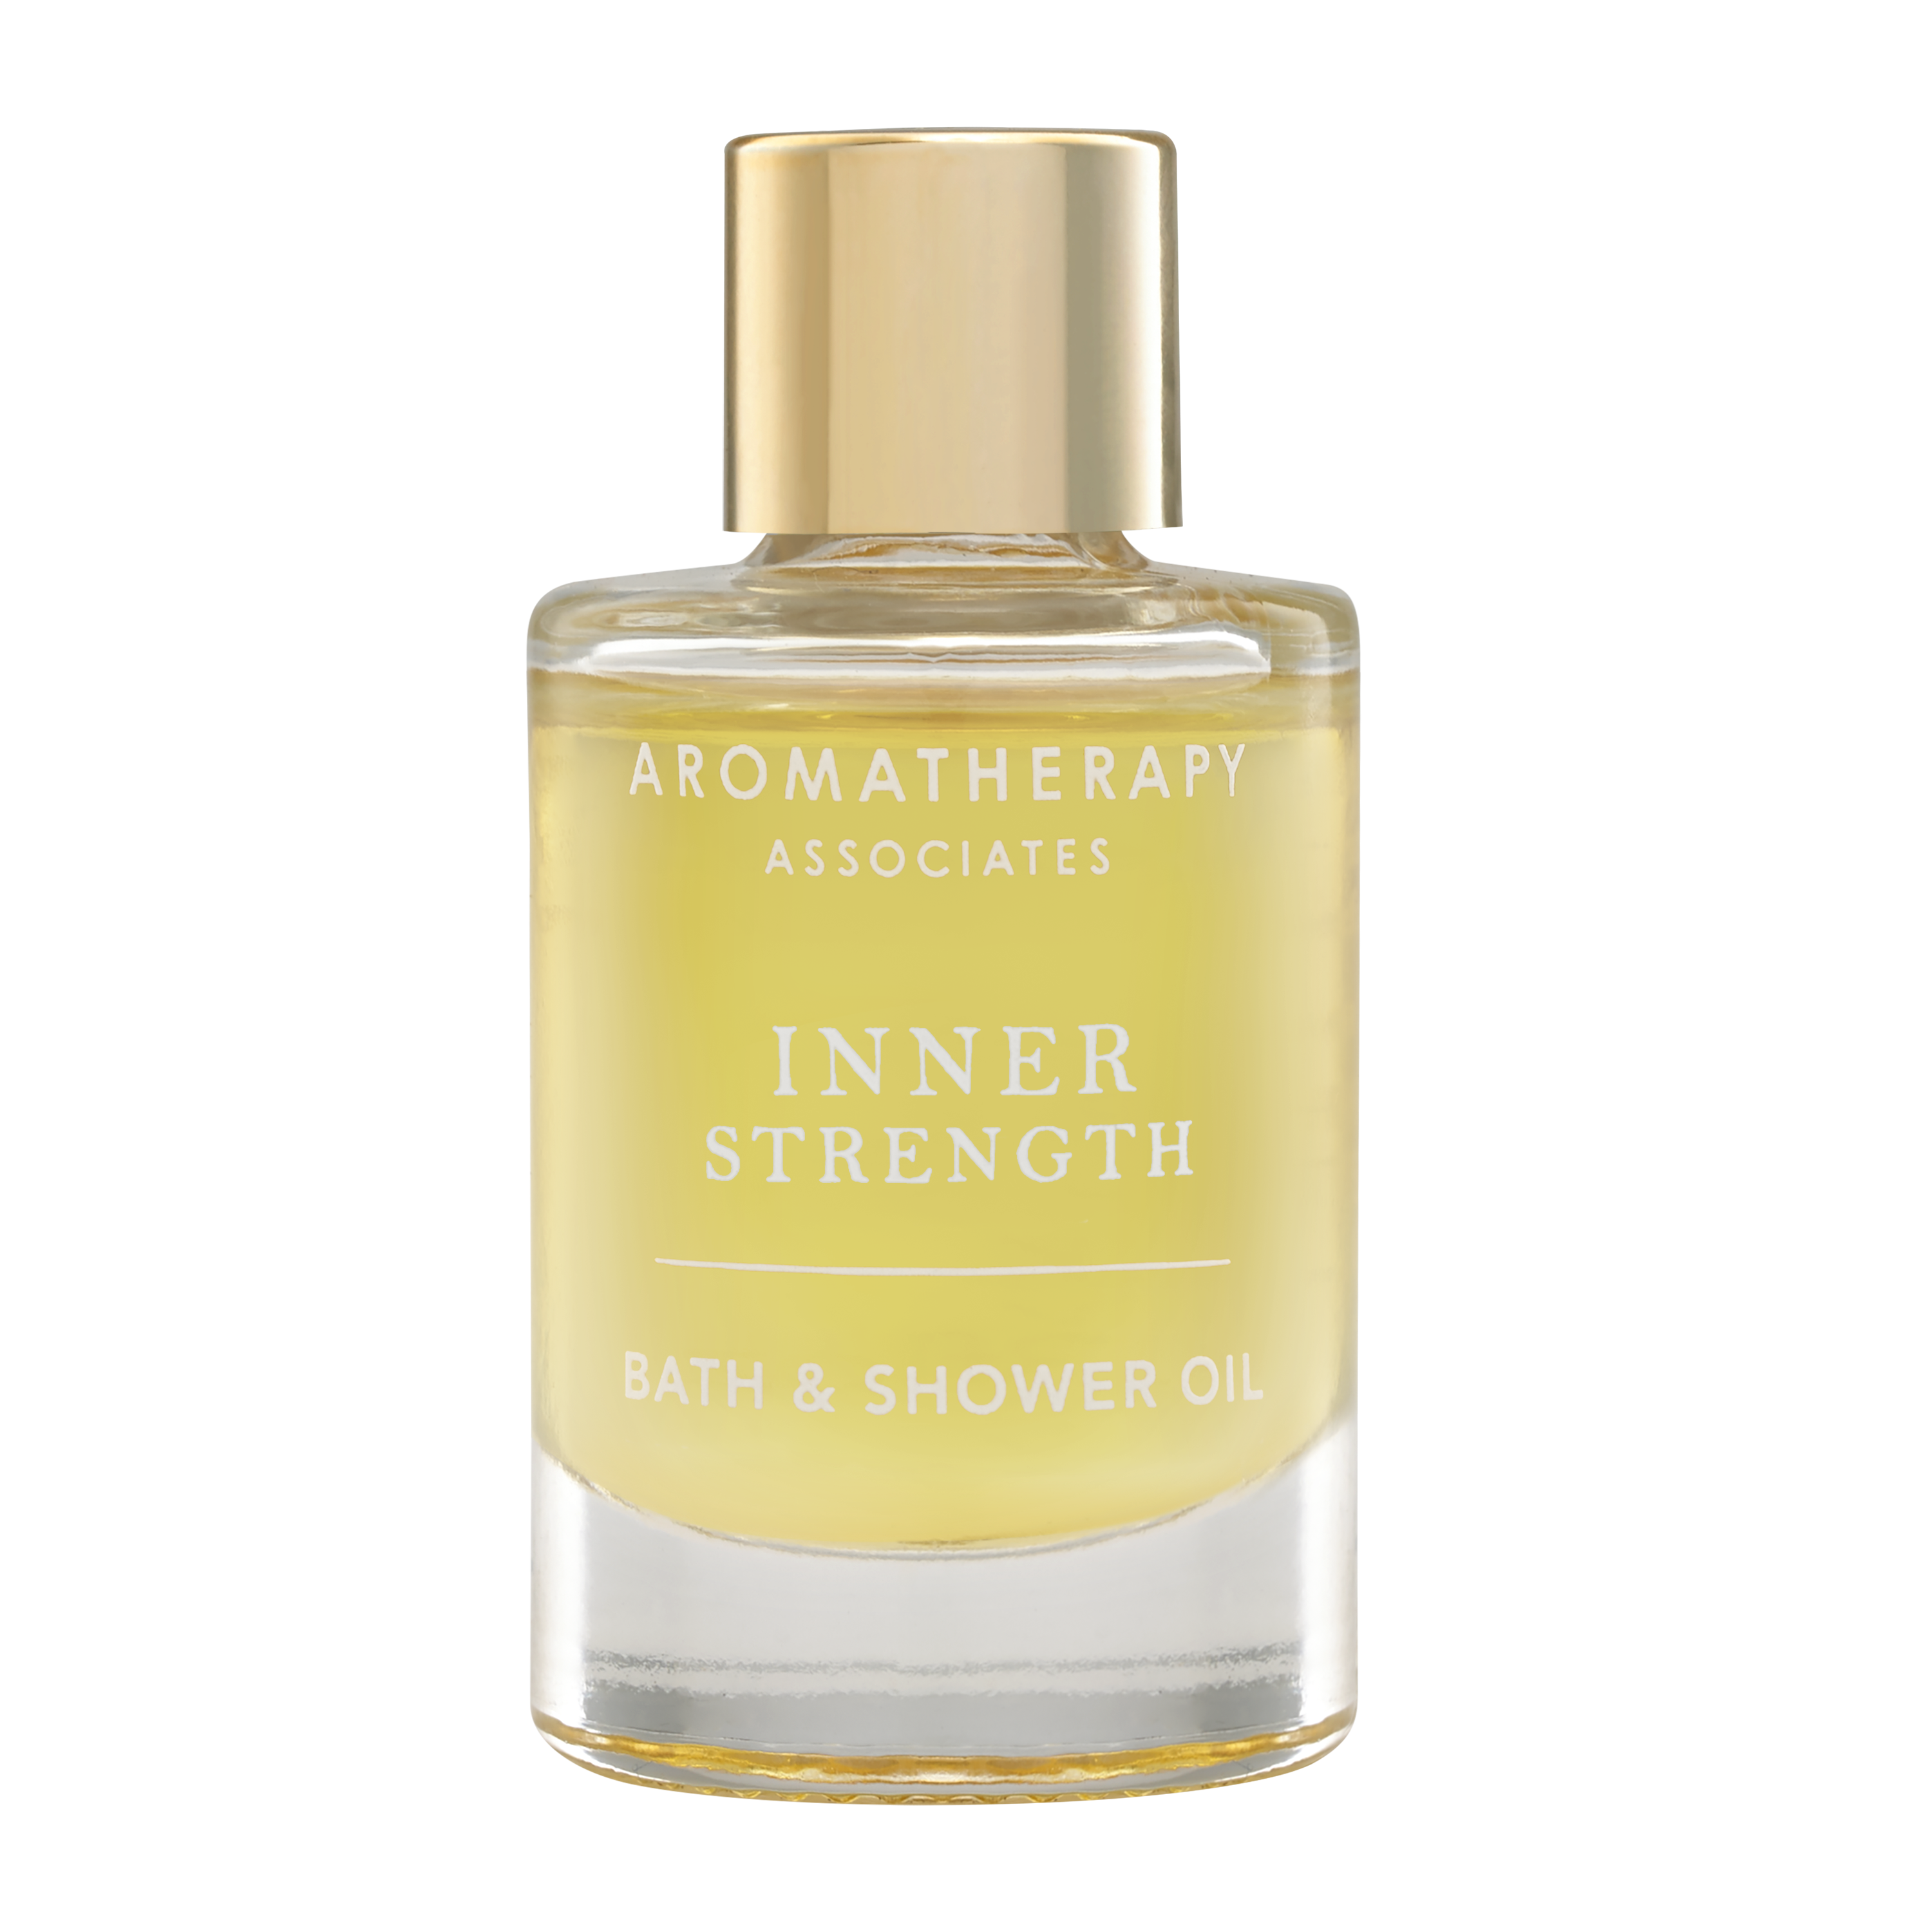 Inner Strength Bath & Shower Oil 9ml Aromatherapy Associates